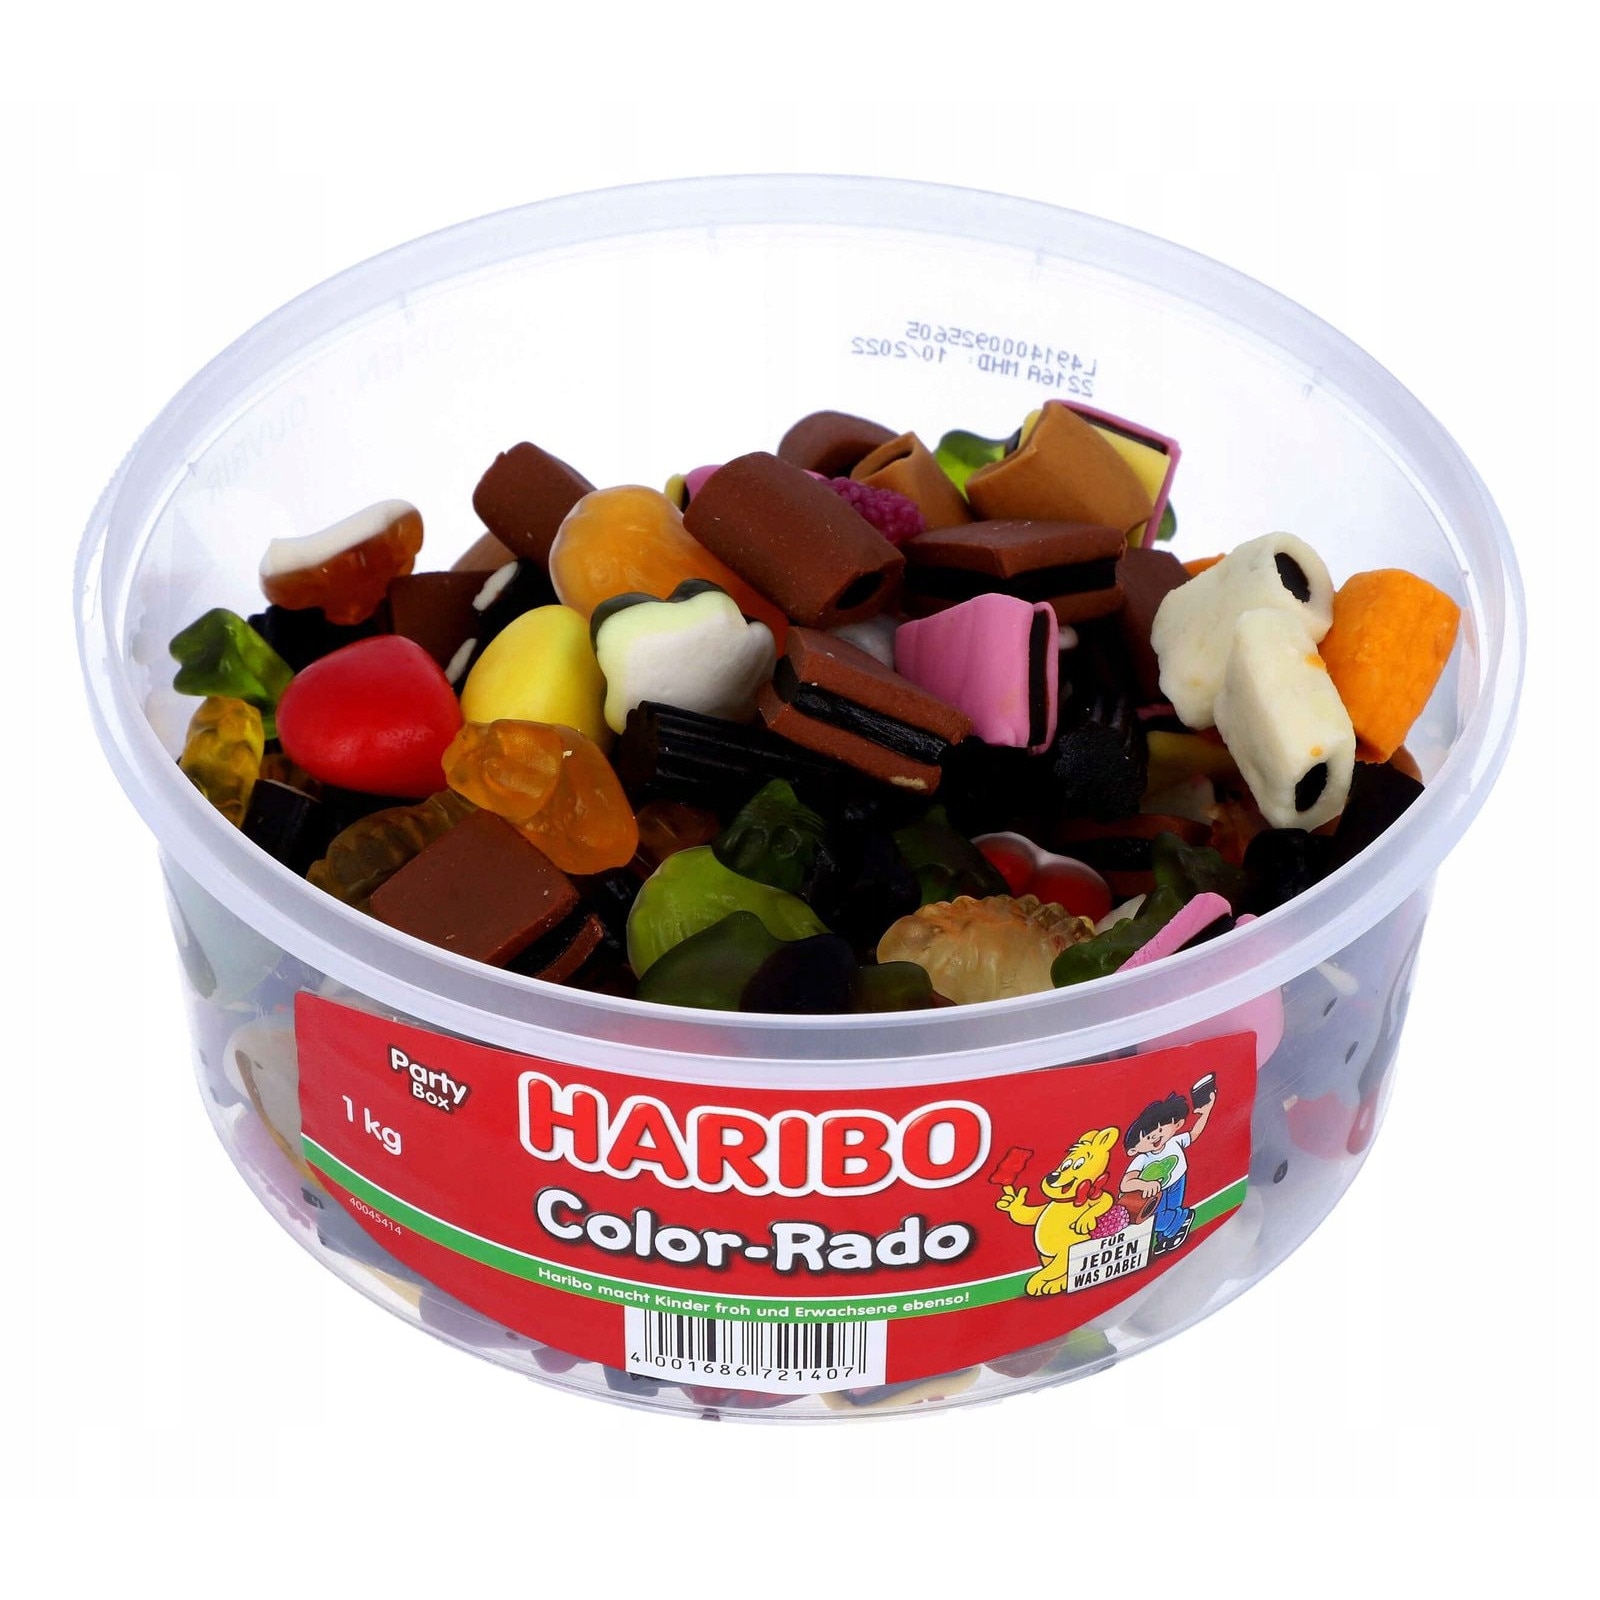 Jeleuri Color-Rado, Haribo, Aroma fructe, 1 kg 